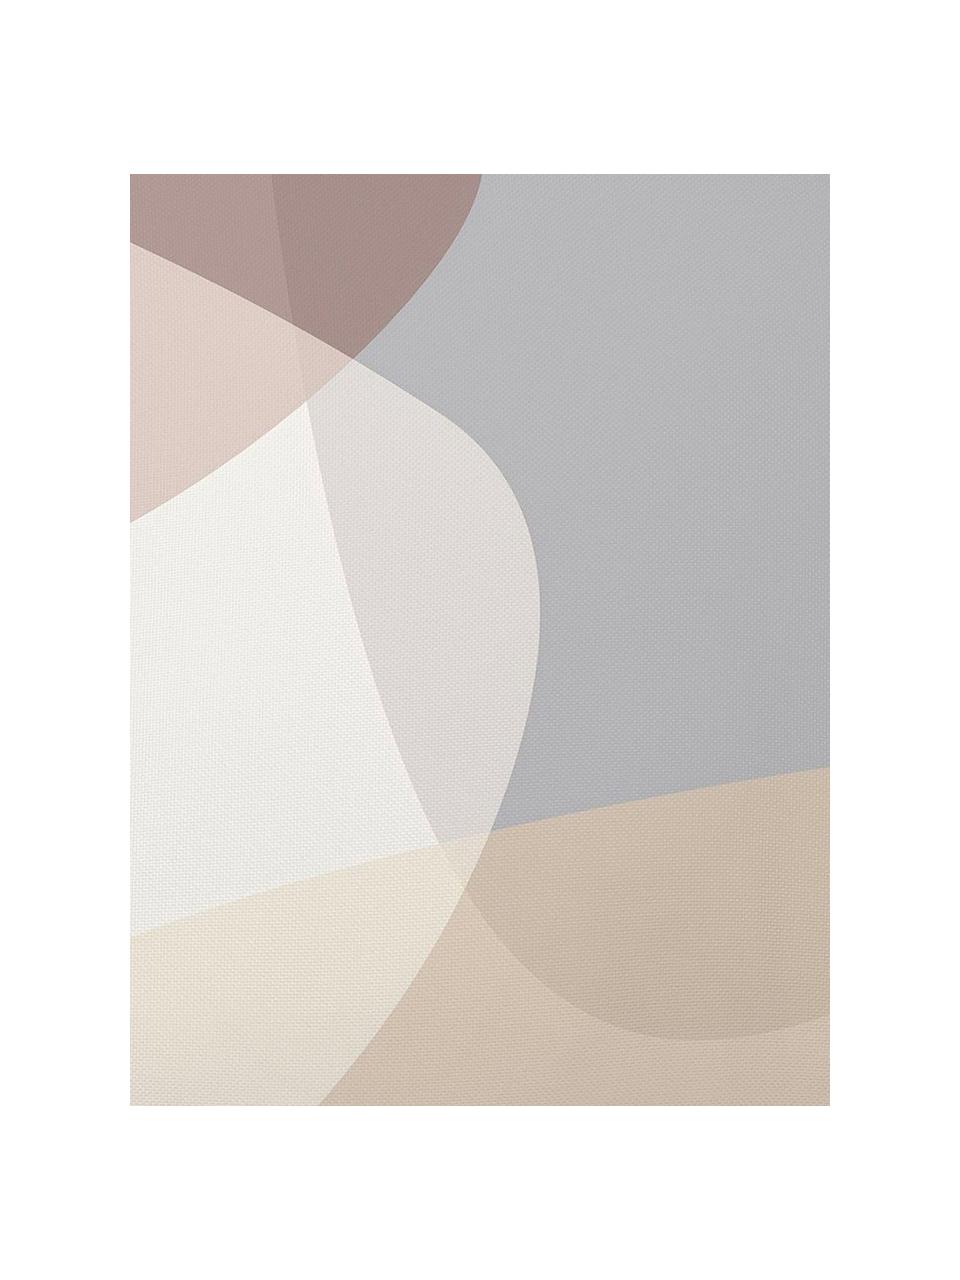 Kissenhülle Graphic mit geometrischem Print, 100% Polyester, Beige, Grau, Creme, Altrosa, 40 x 40 cm